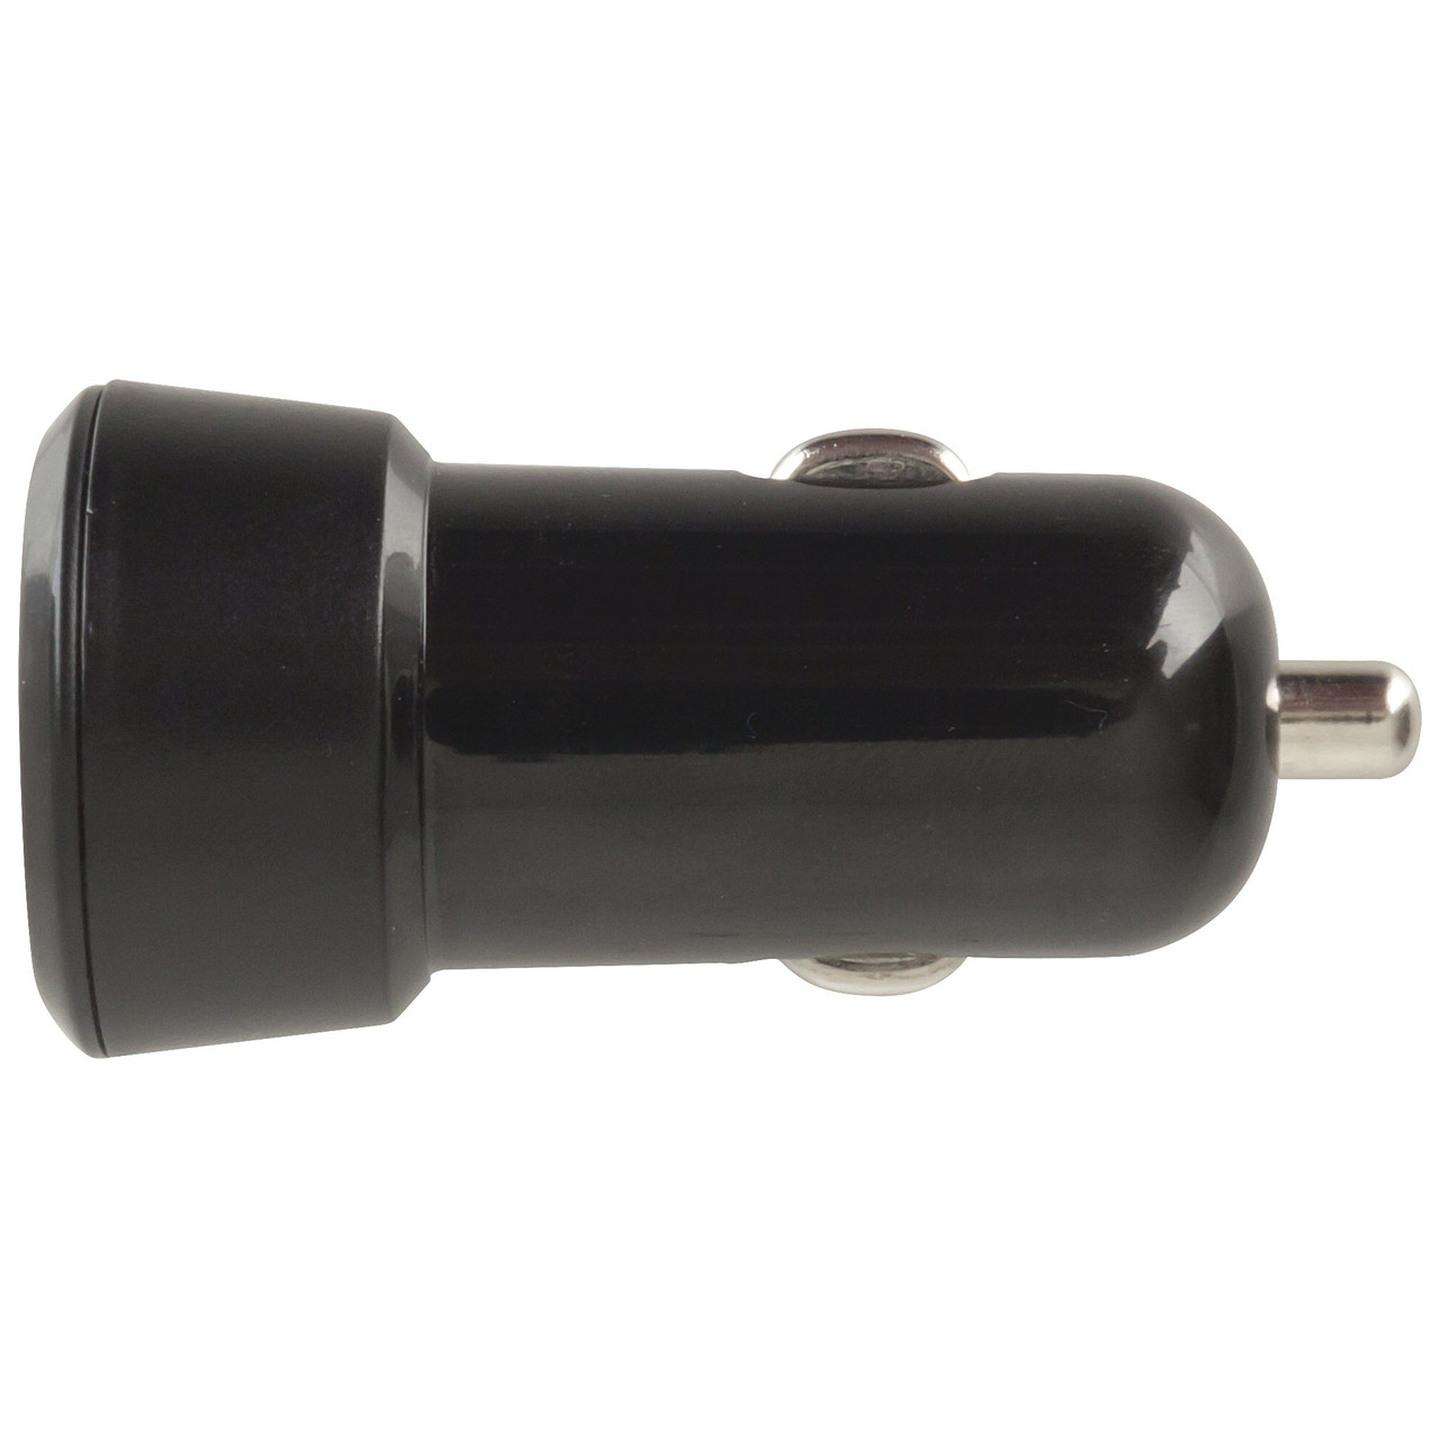 3A USB A & Type-C Car Cigarette Lighter Adaptor